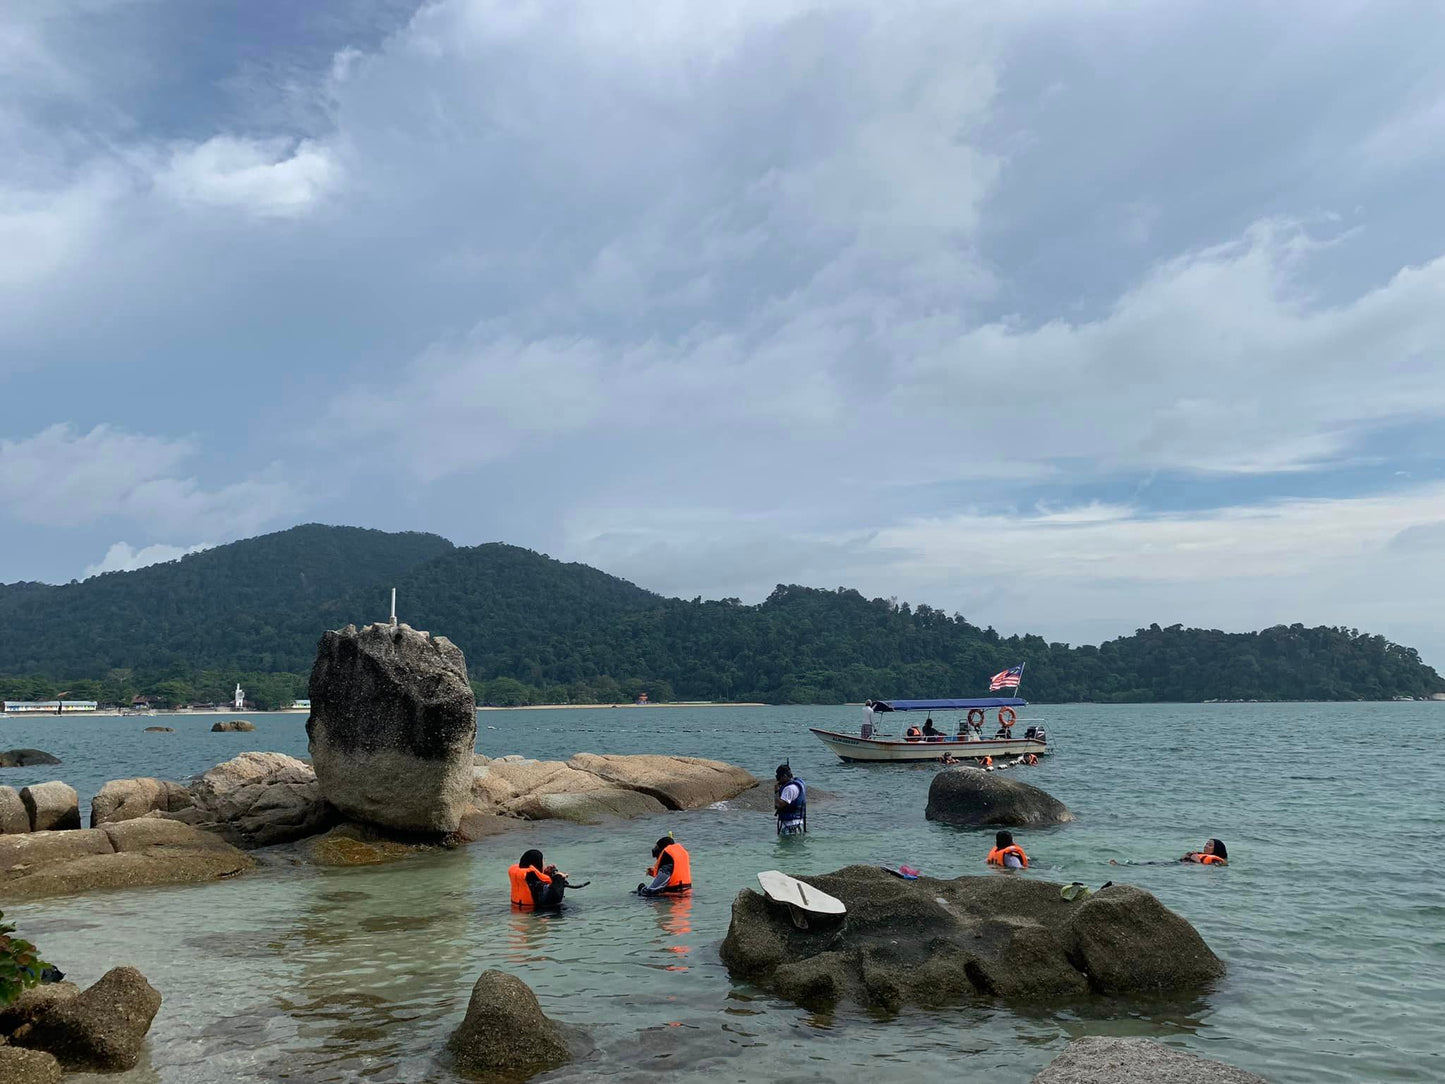 A5C: (3일) 팡코르 섬 파라다이스: 말레이시아 보석의 고요한 아름다움을 발견해보세요